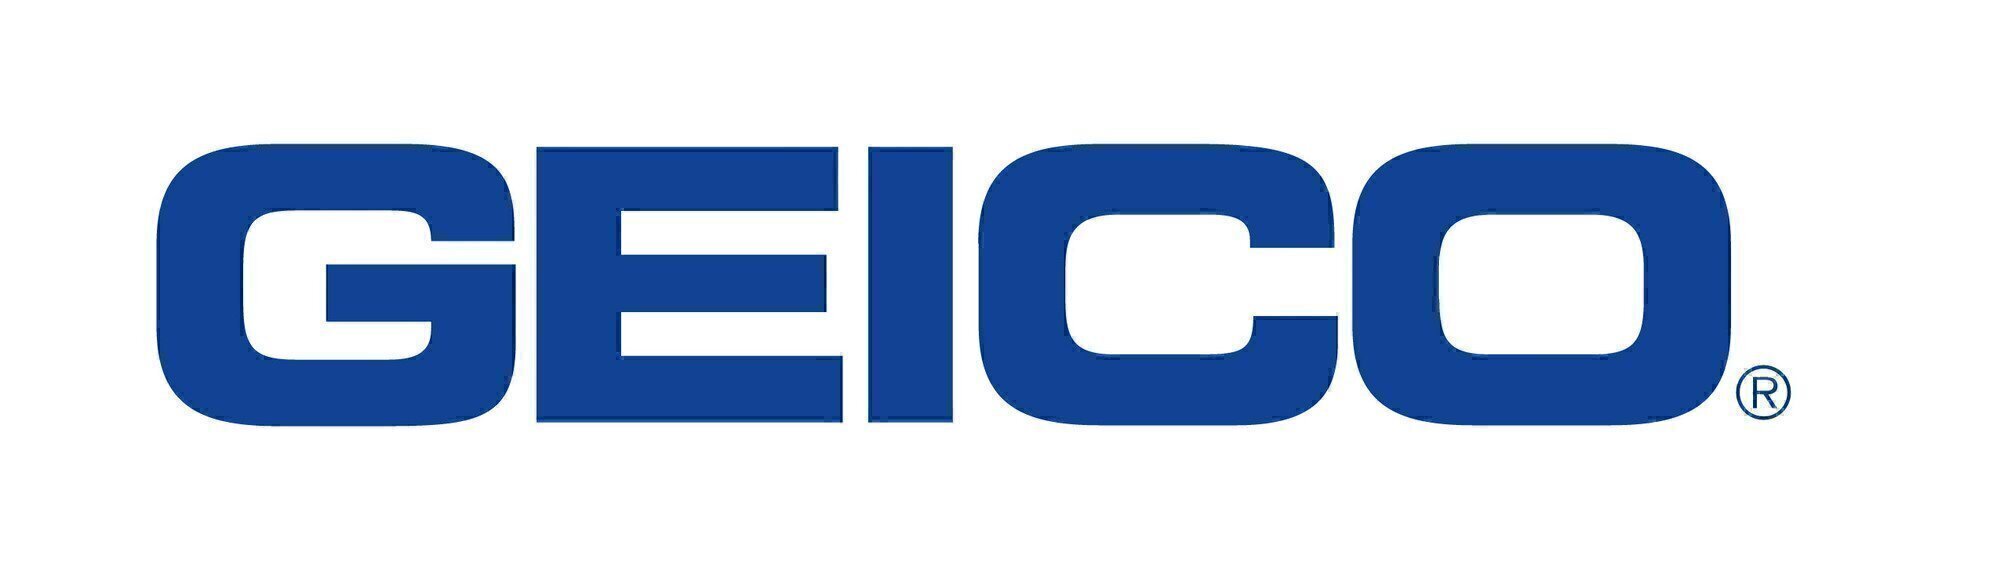 GEICO logo